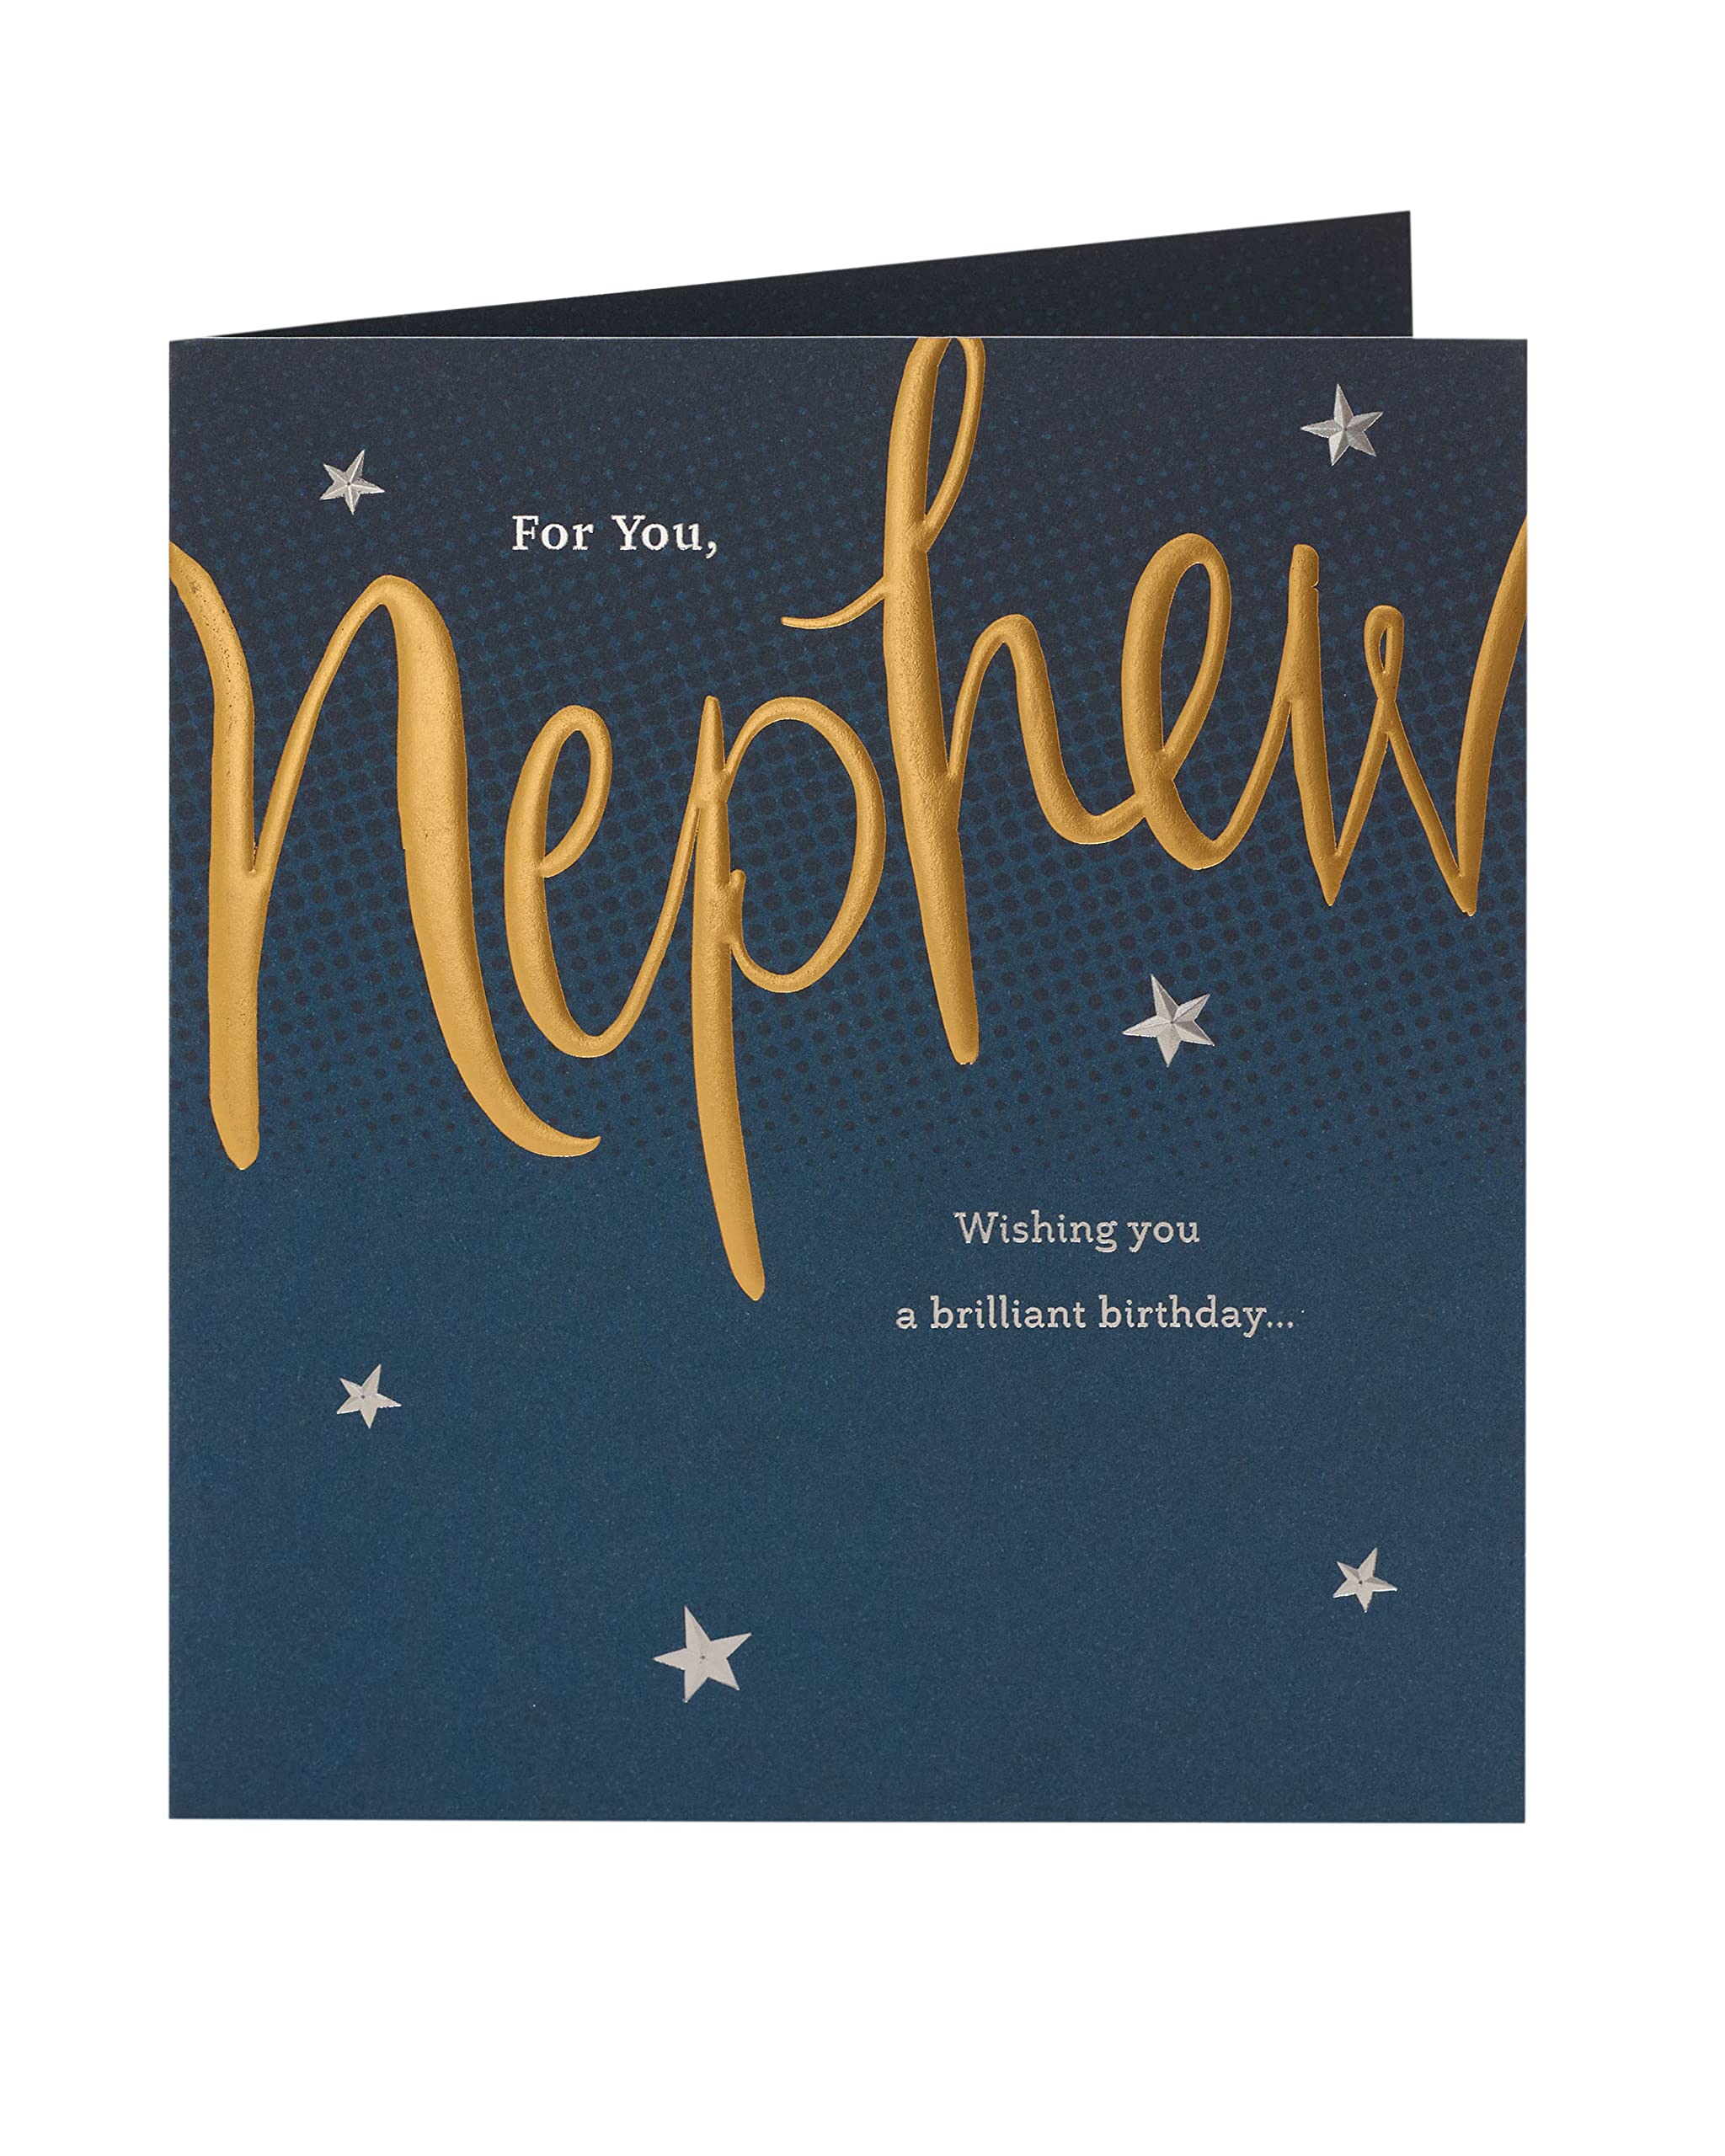 UK Greetings Nephew Birthday Card - Birthday Card for Him - Birthday Card for Nephew Adult/Teenager